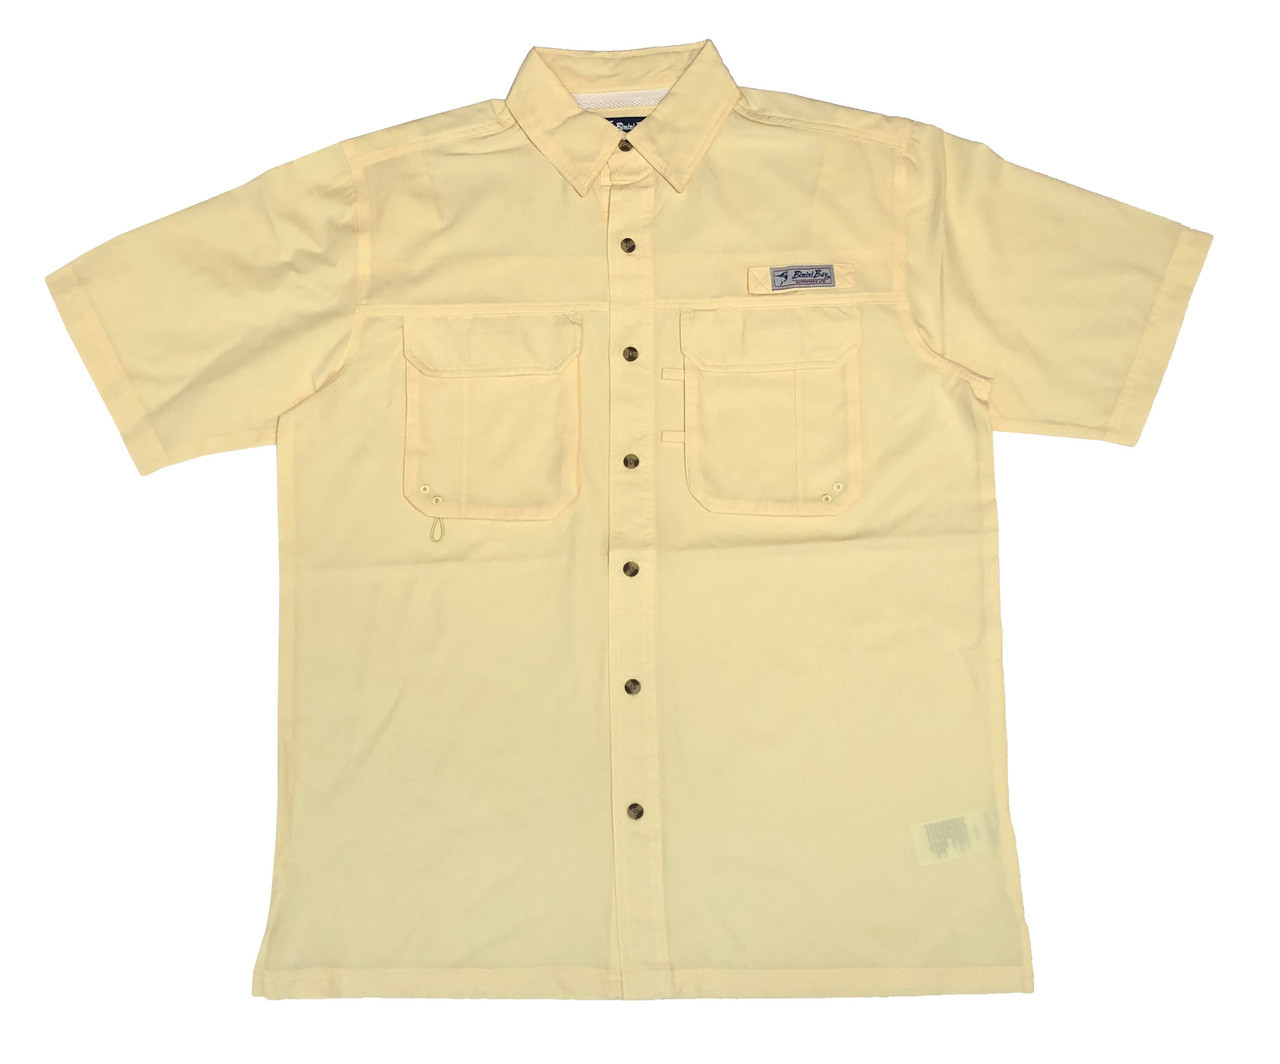 Bimini Bay Outfitters Bimini Flats IV Short Sleeve Shirt - Dick